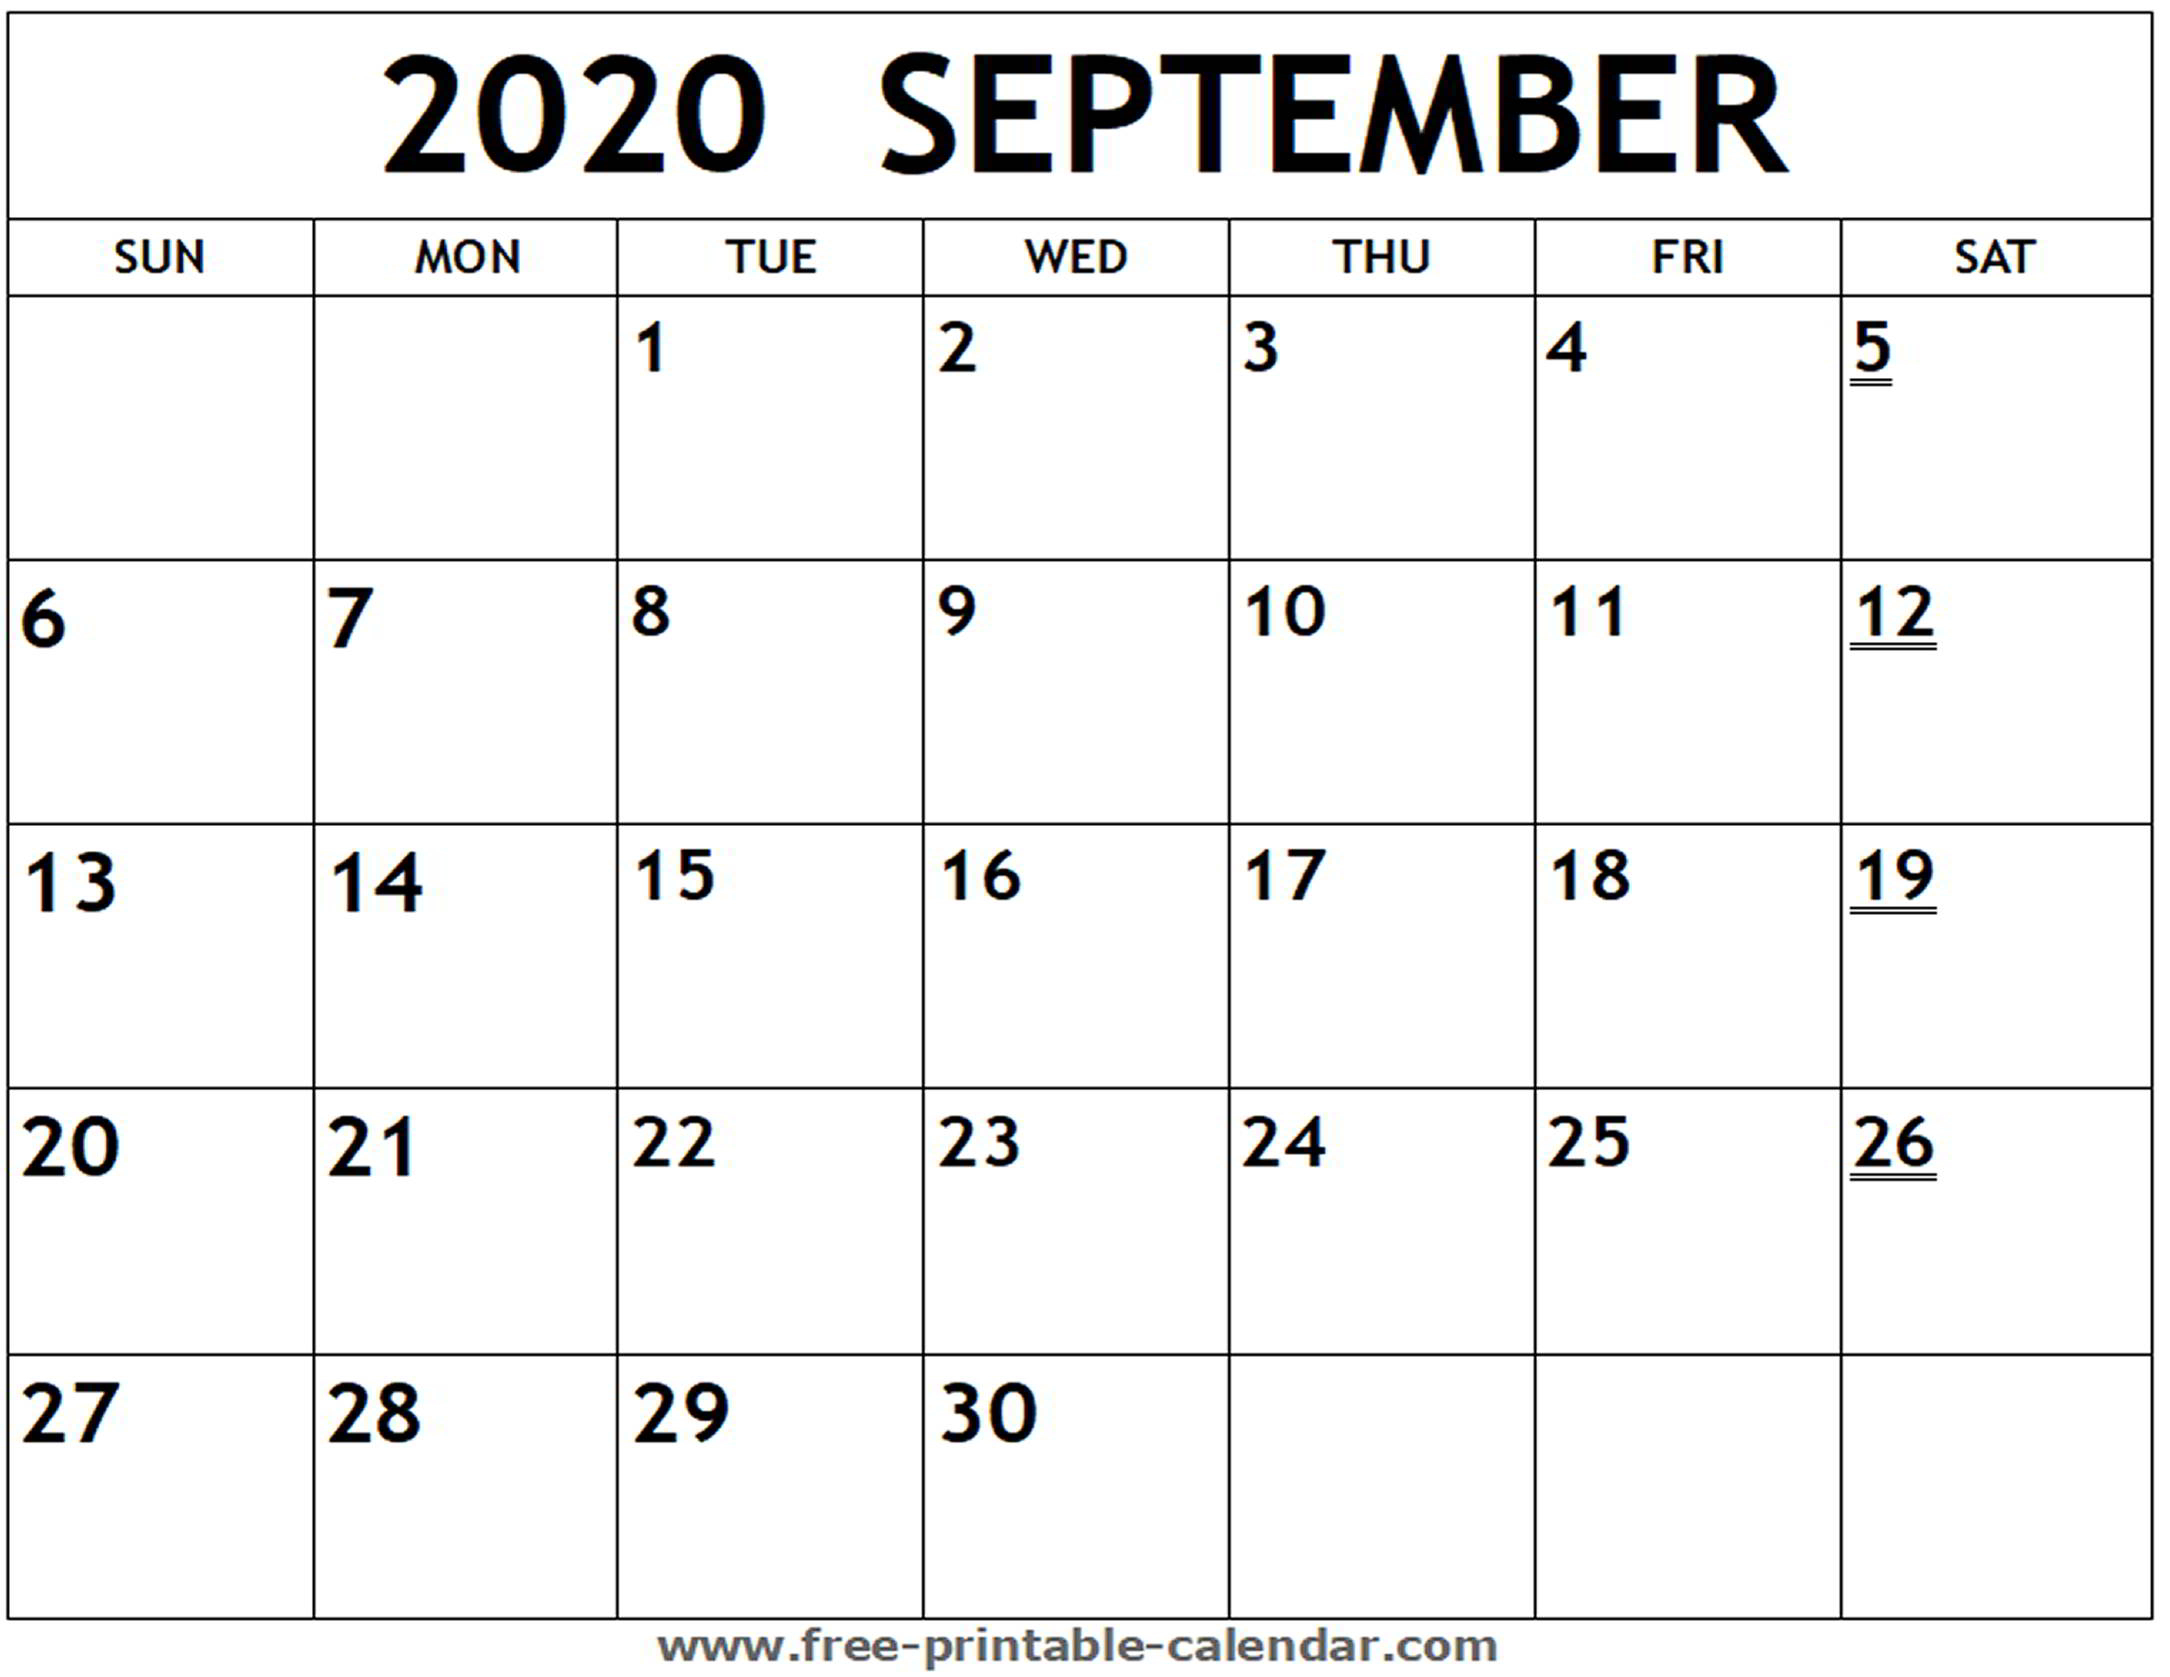 Printable 2020 September Calendar - Free-Printable-Calendar